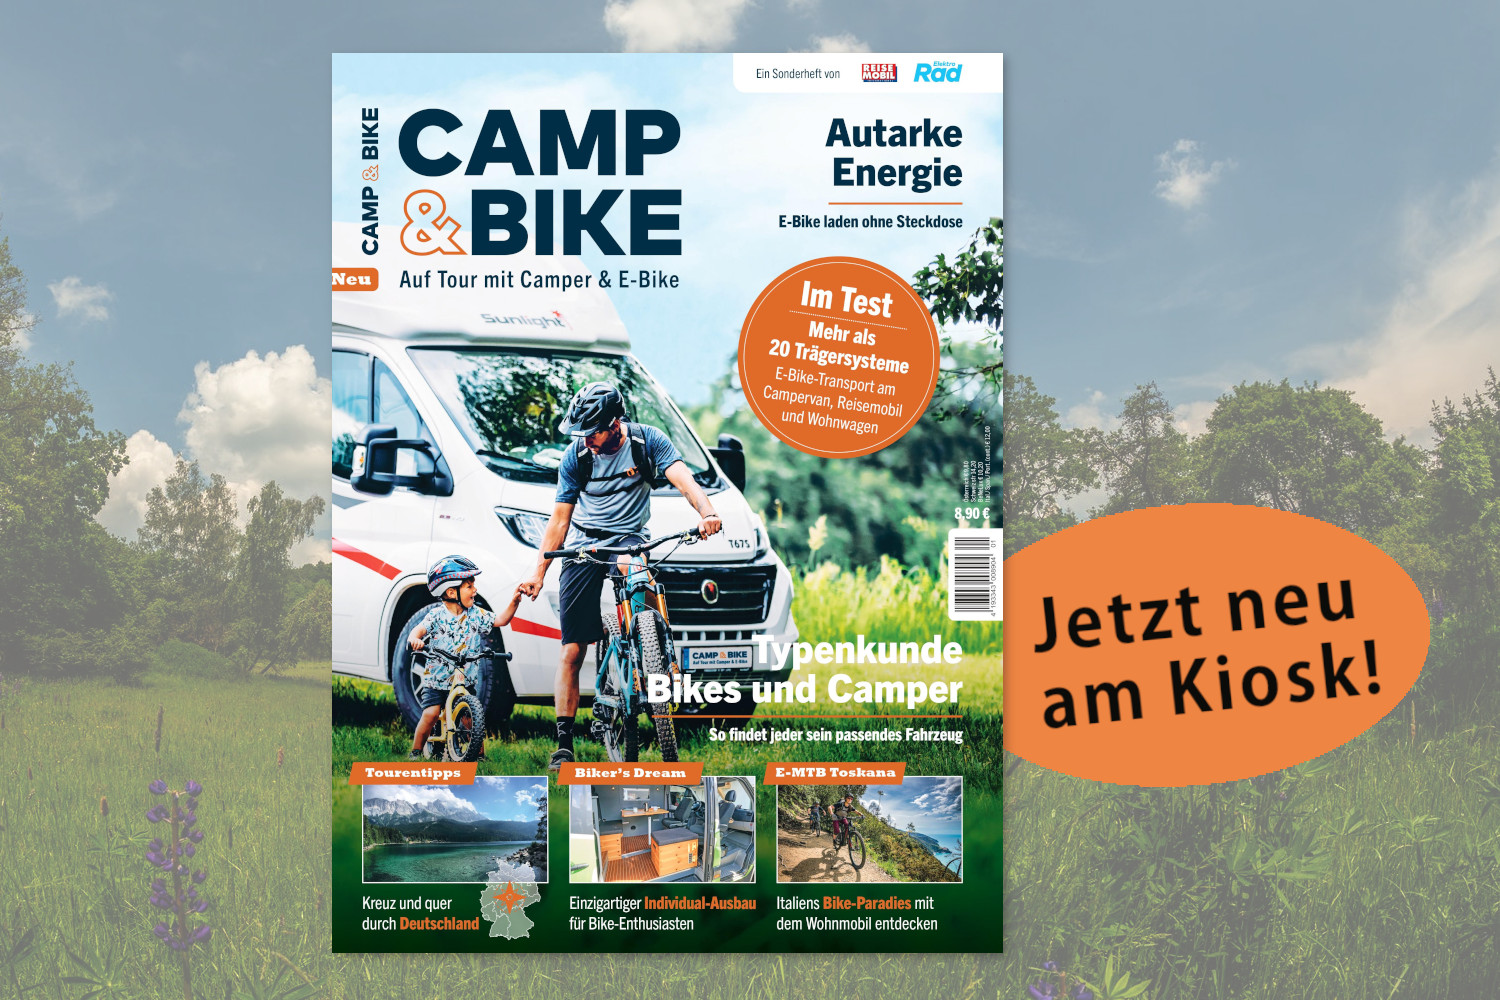 Camp & Bike